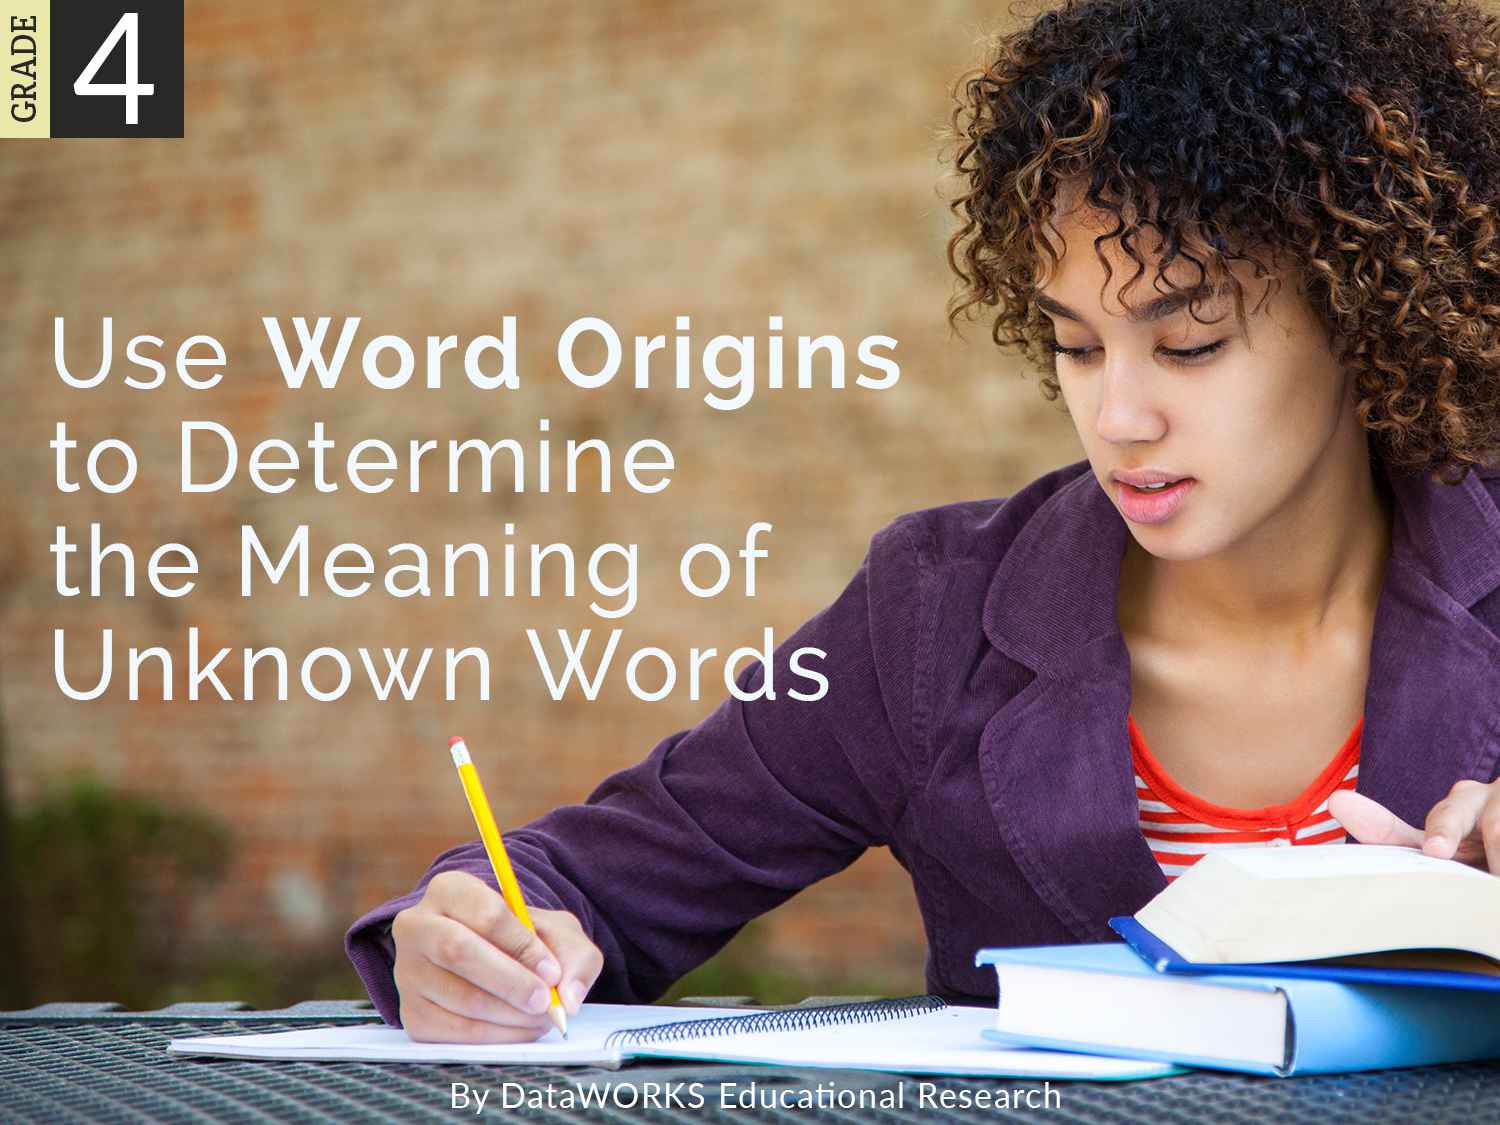 word origin presentation